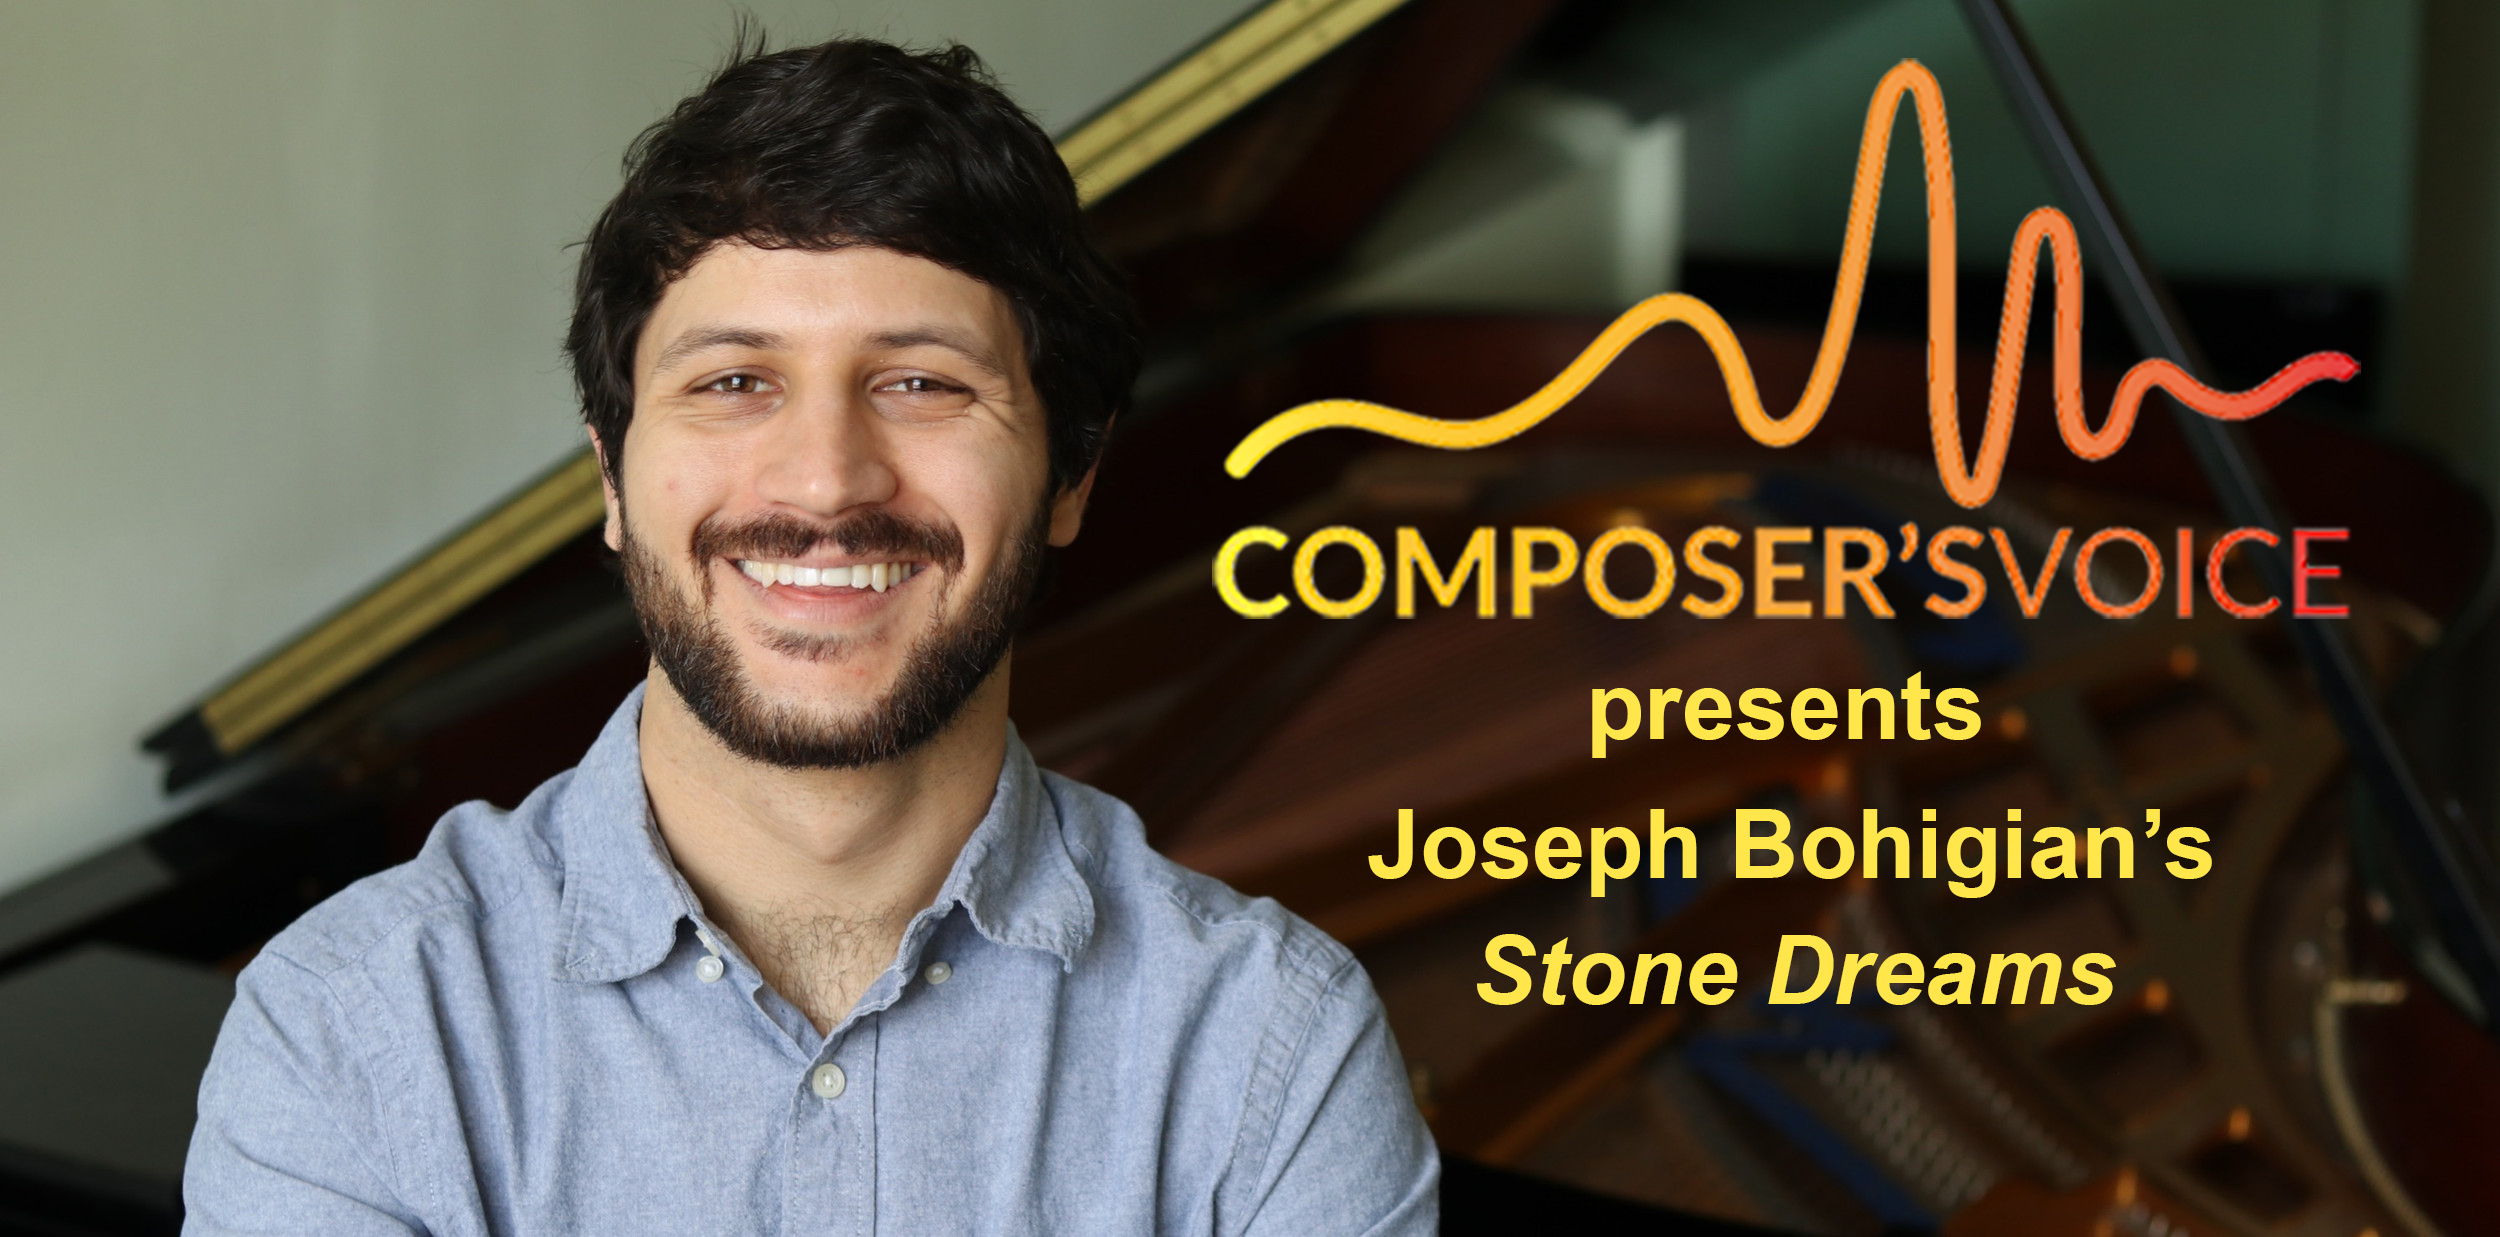 Composer's Voice features Joseph Bohigian's Stone Dreams